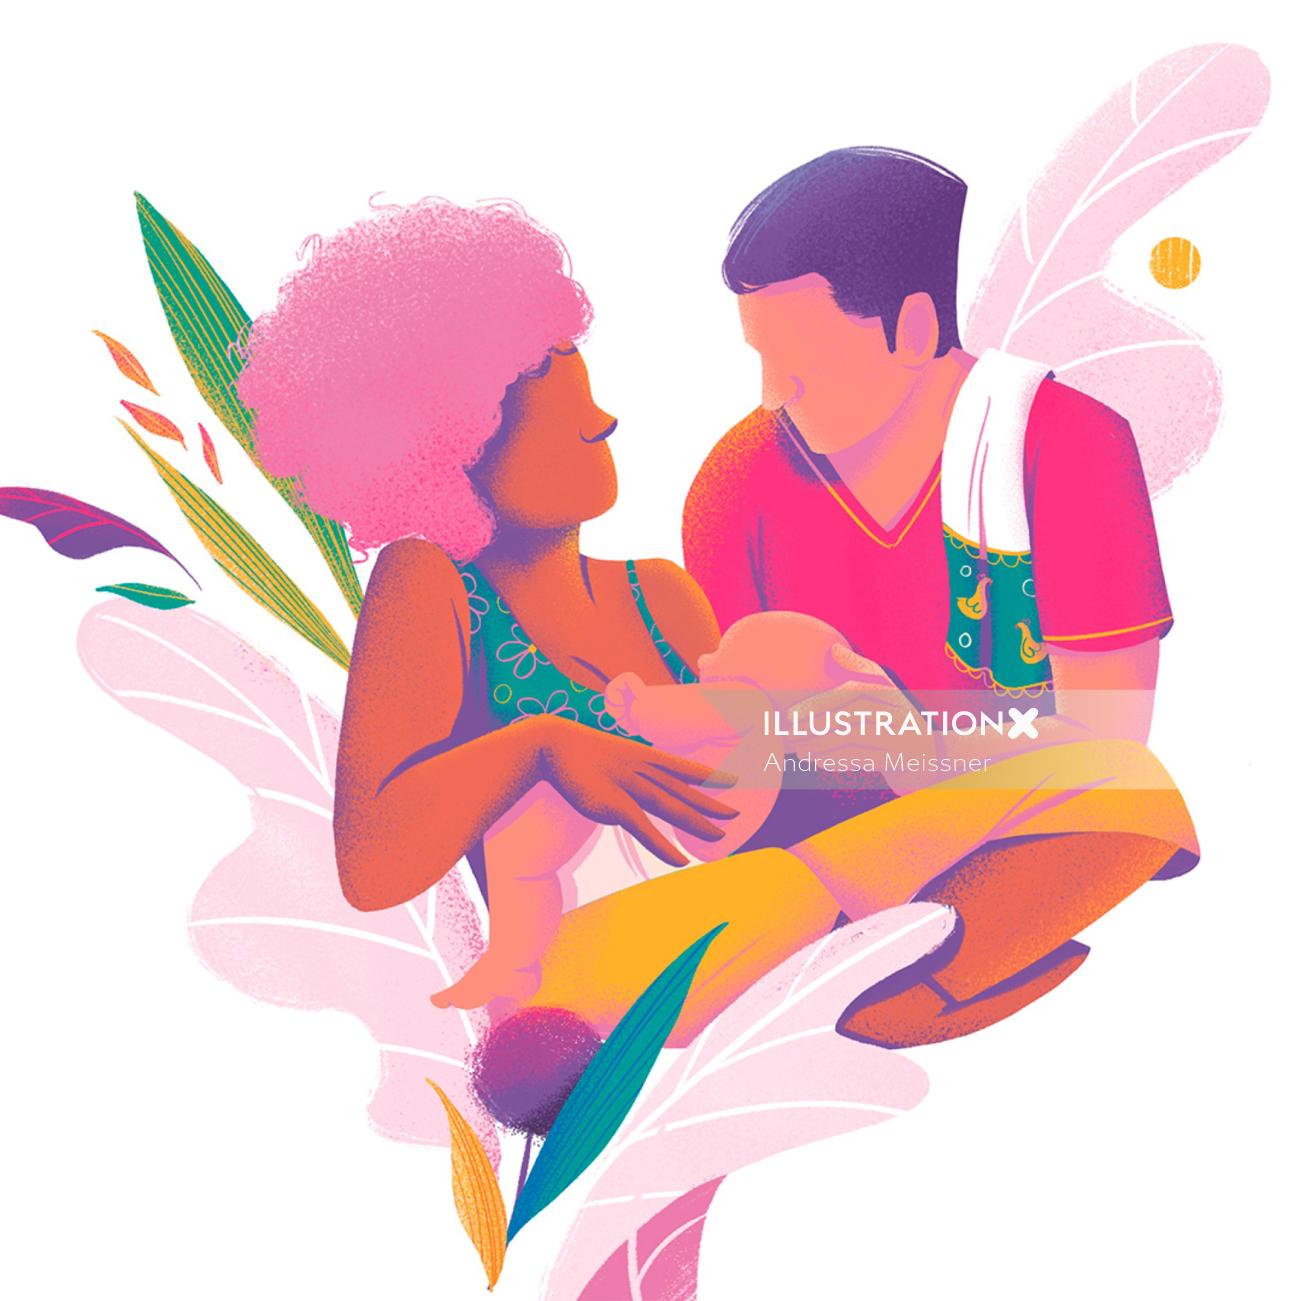 Breastfeeding illustration for A Incrível Jornada book